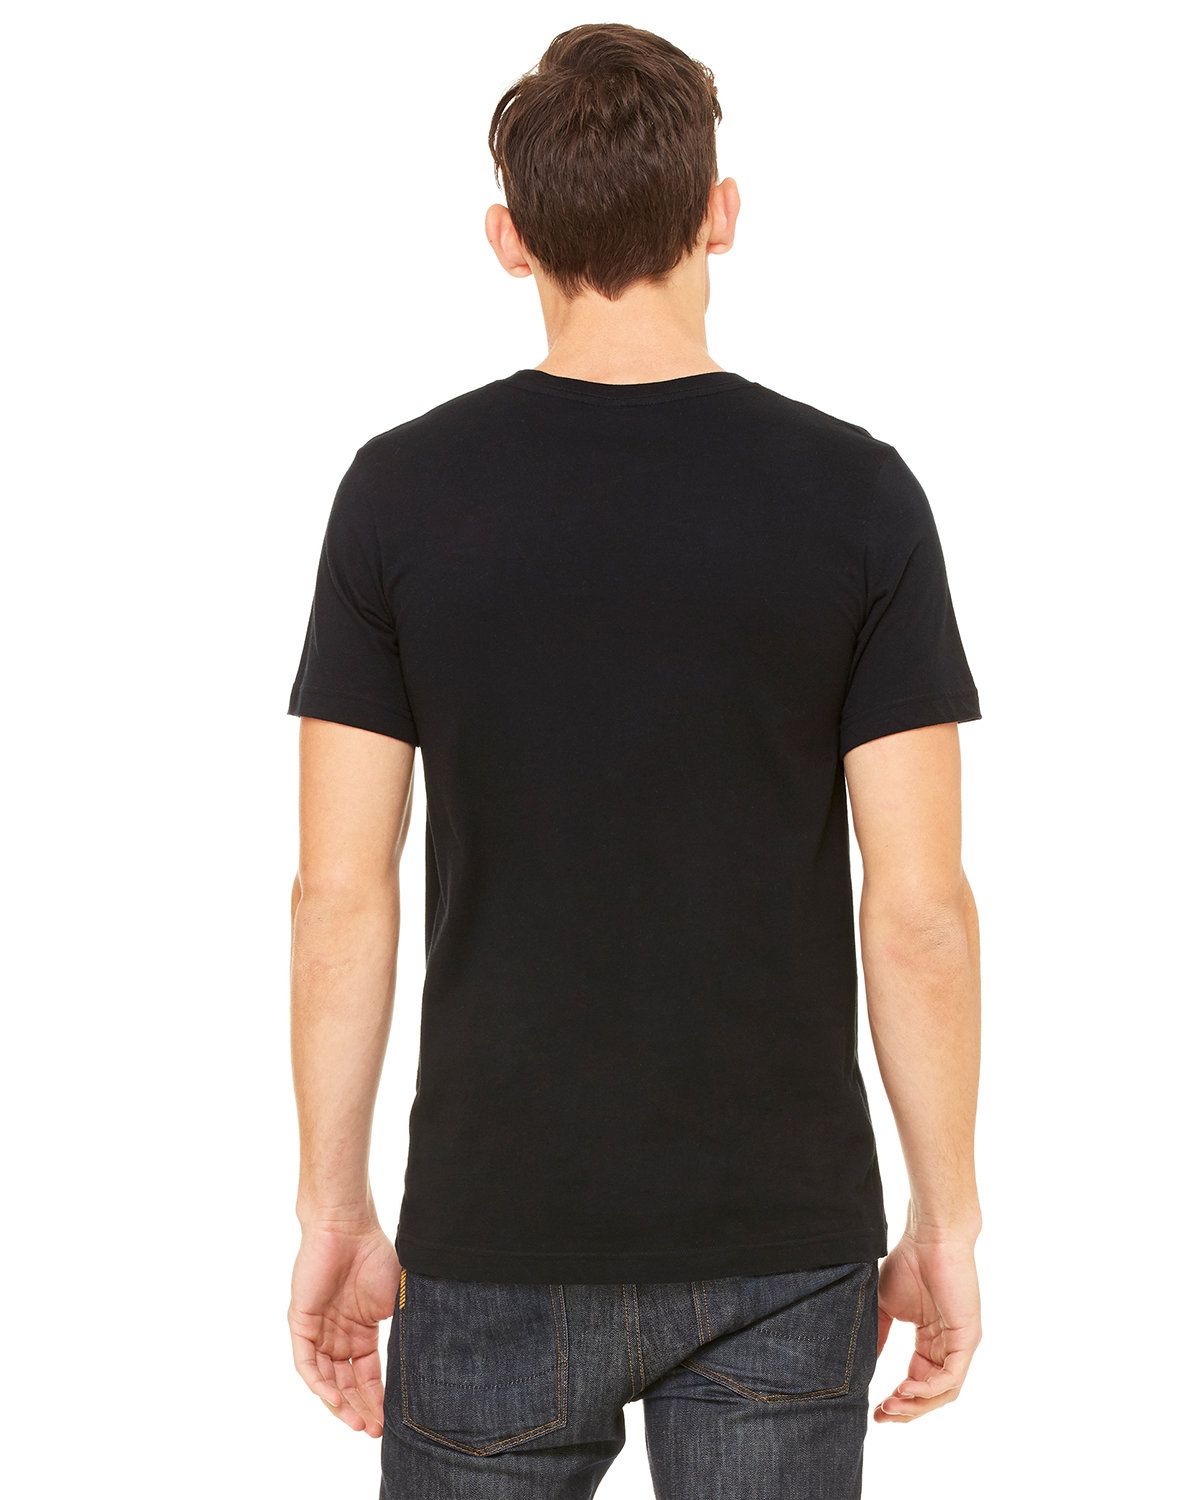 'Bella Canvas 3021 Men's Jersey Short-Sleeve Pocket T-Shirt'